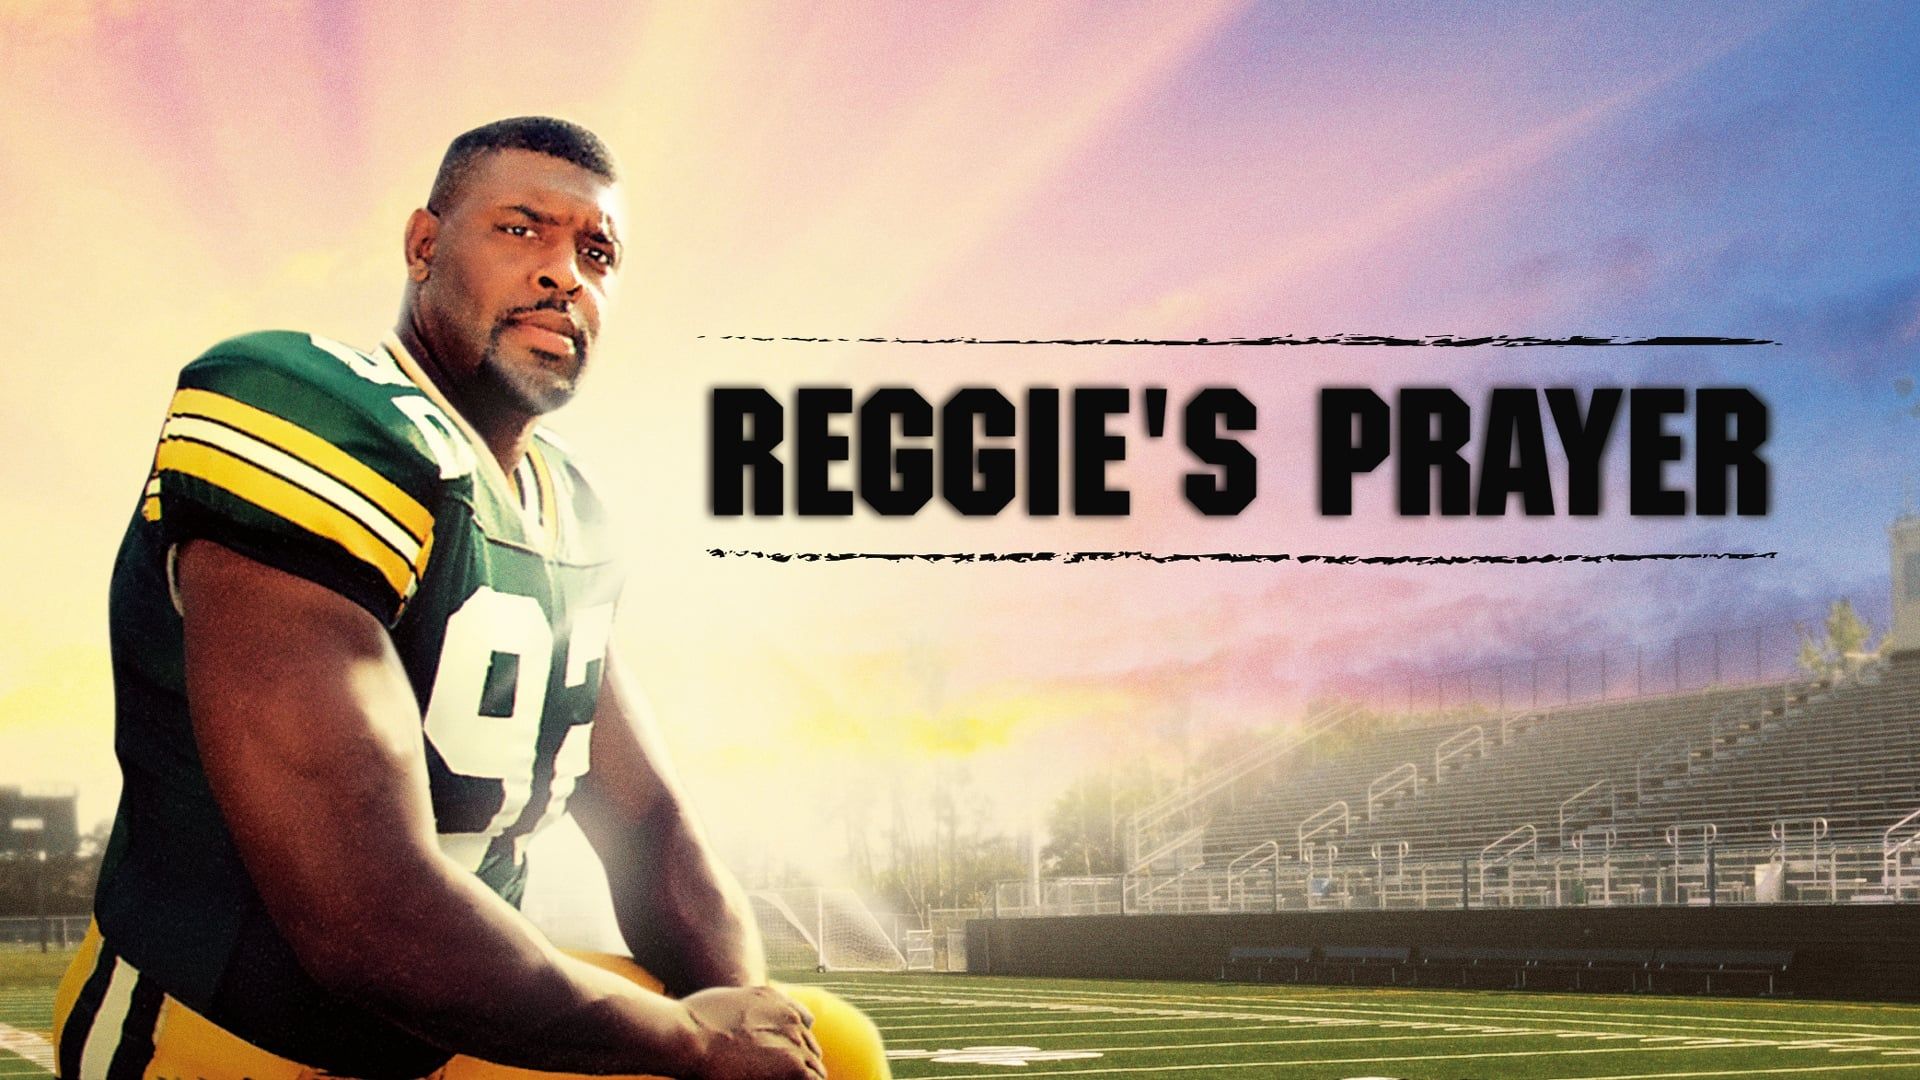 Reggie's Prayer background